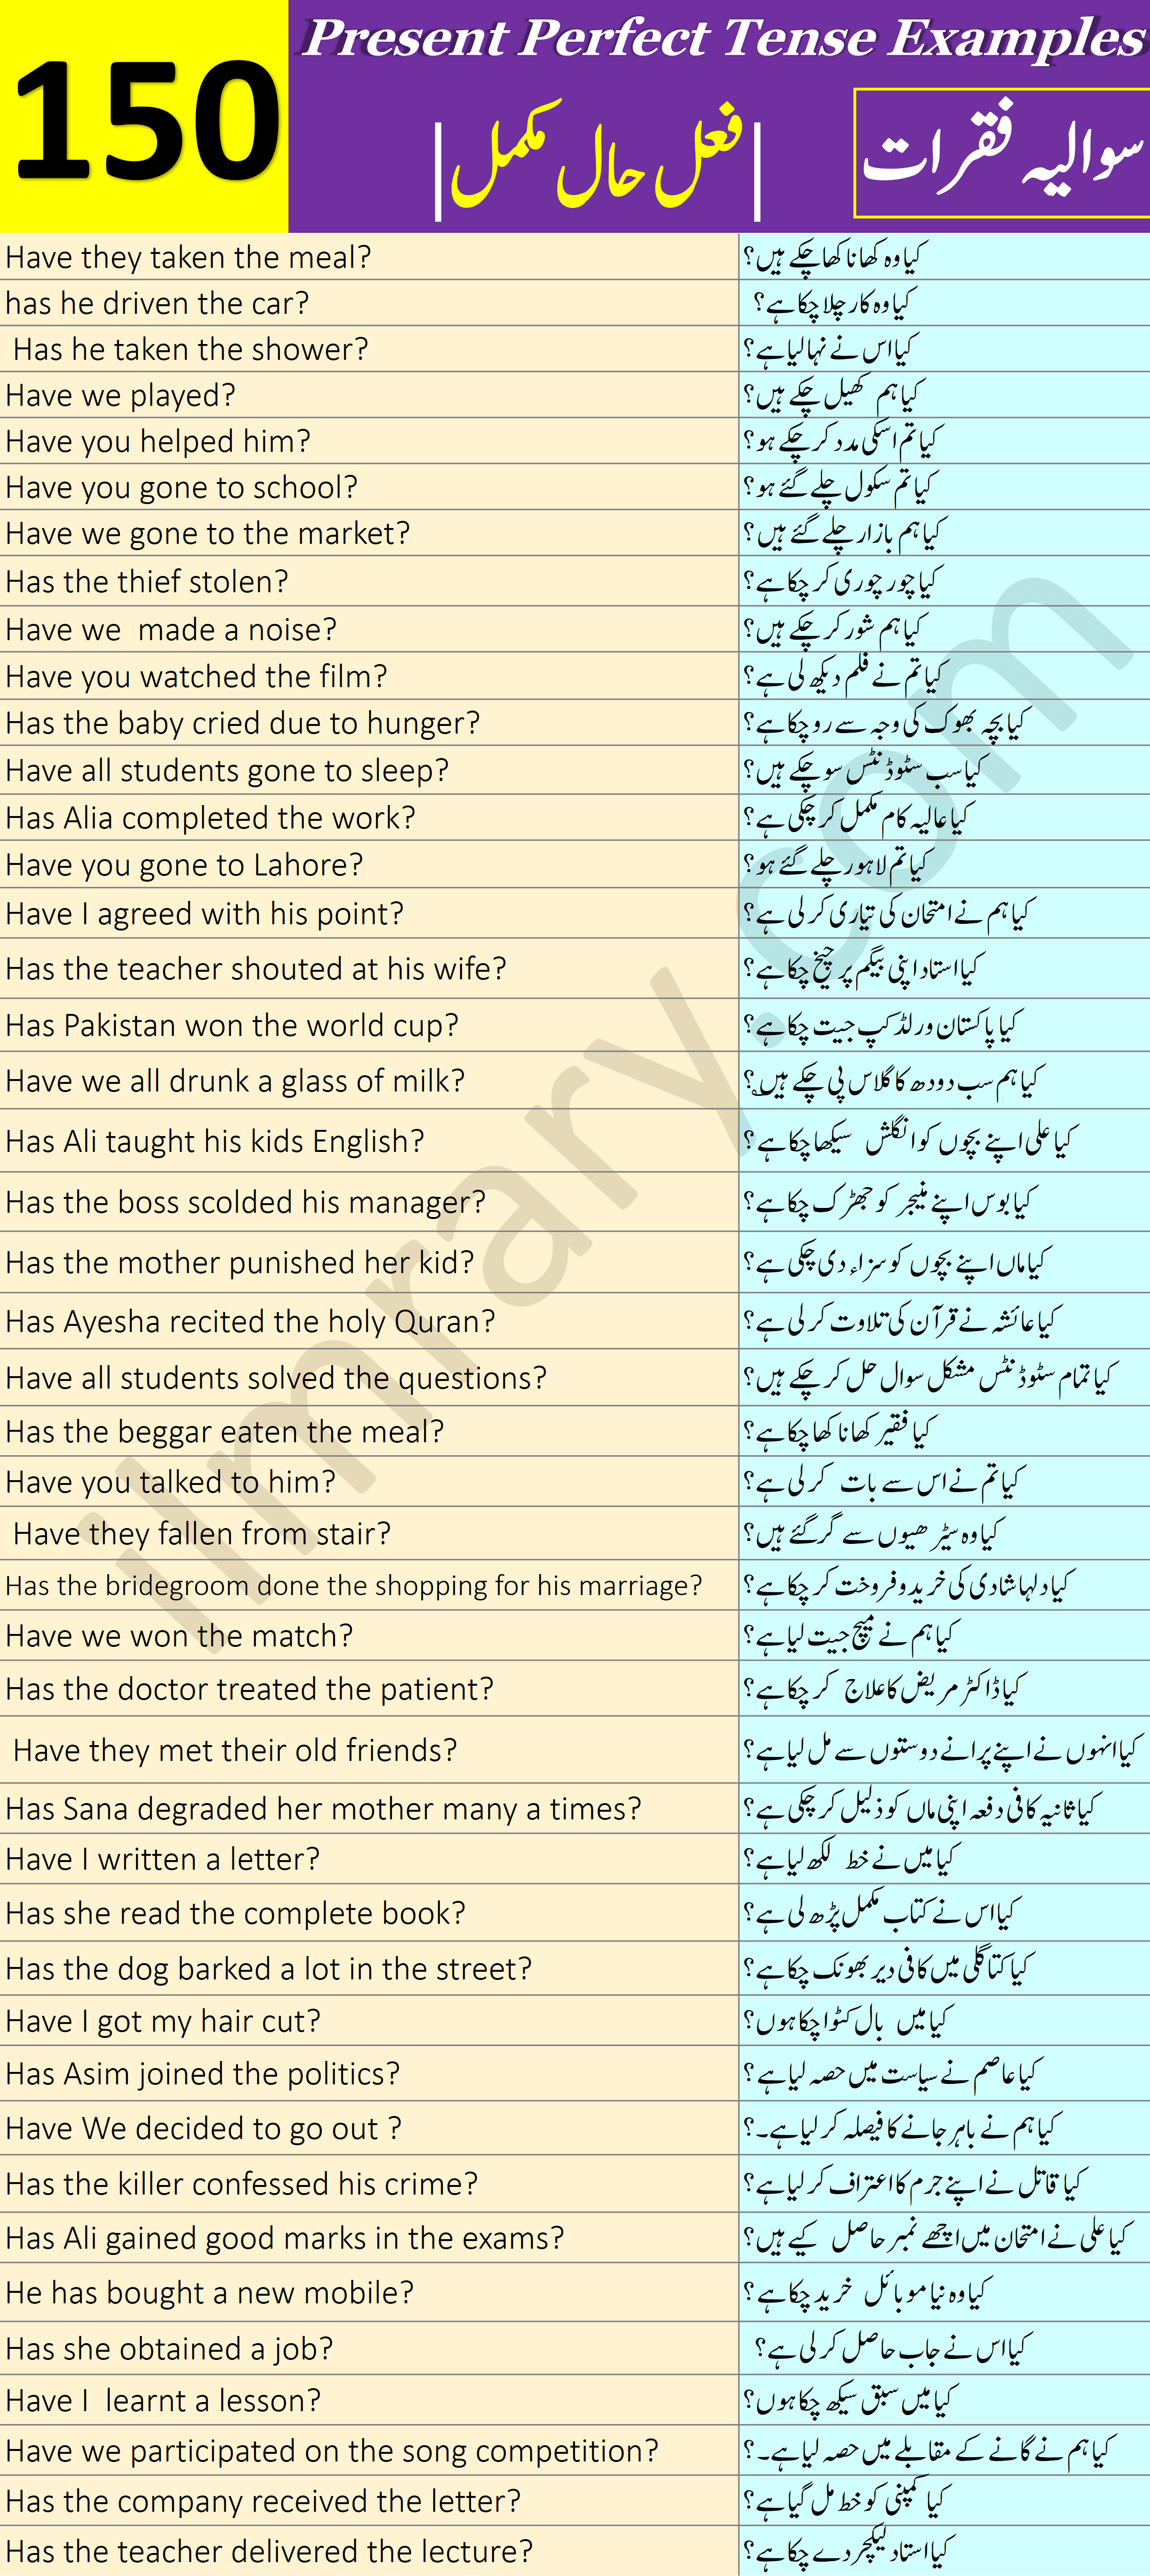 150 Interrogative Sentences For Present Perfect Tense With Urdu Translation